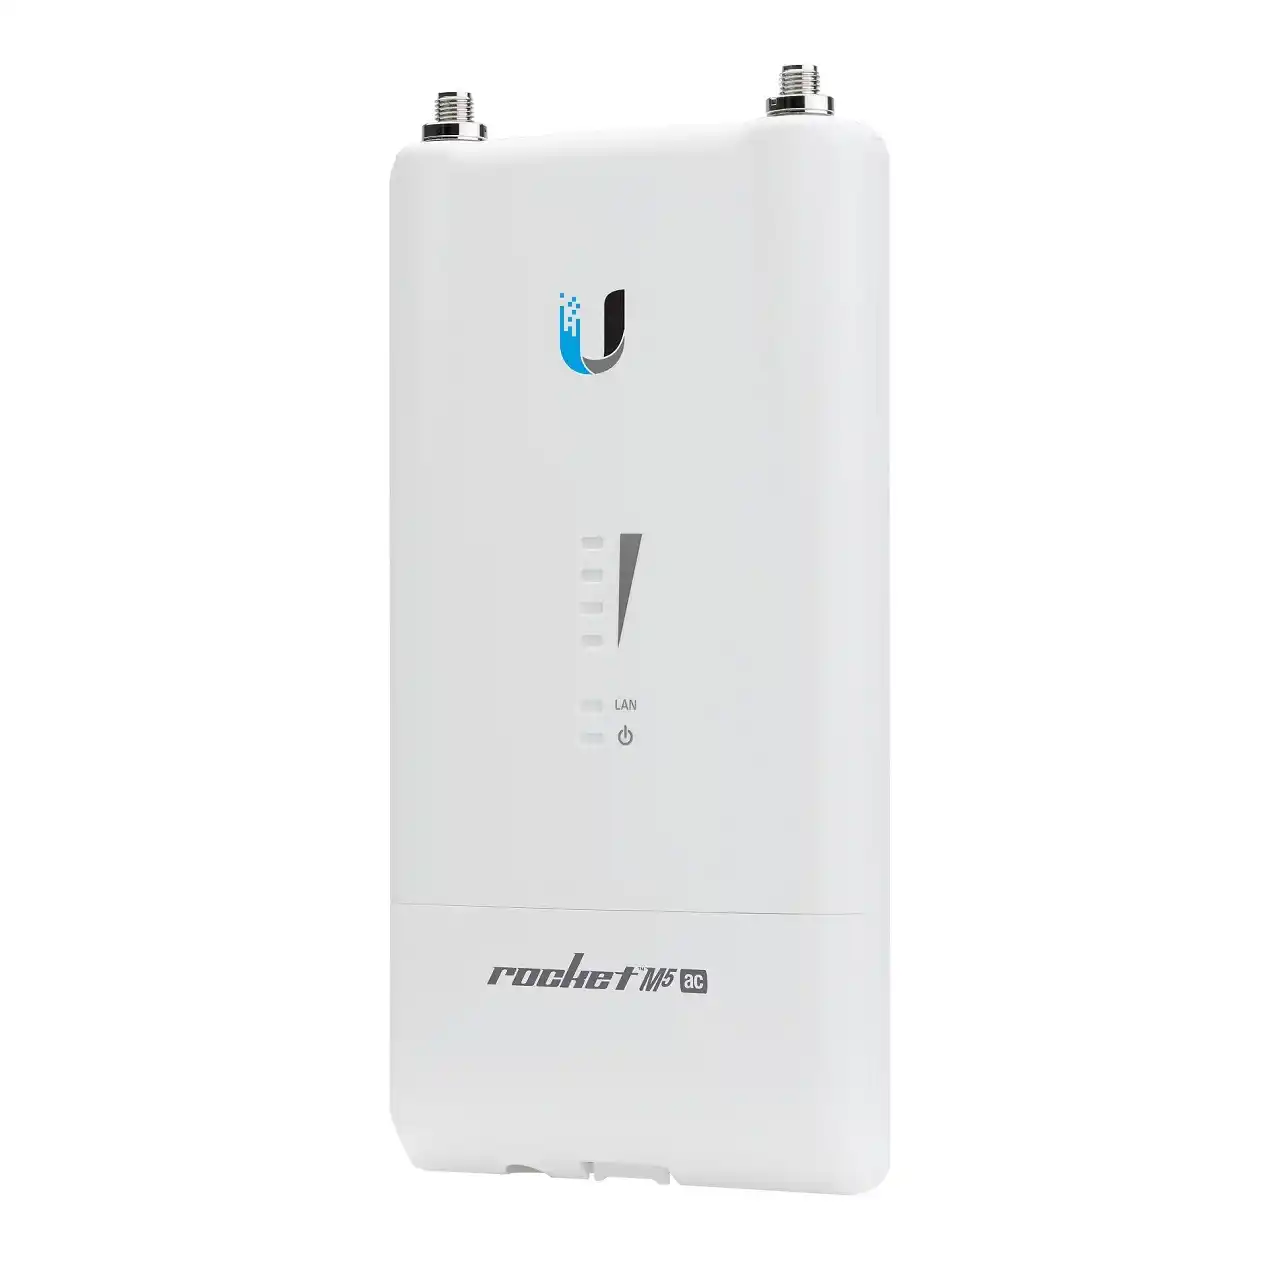 Ubiquiti ( Ubnt ) - R5AC-LITE 5 GHz Rocket AC, Lite